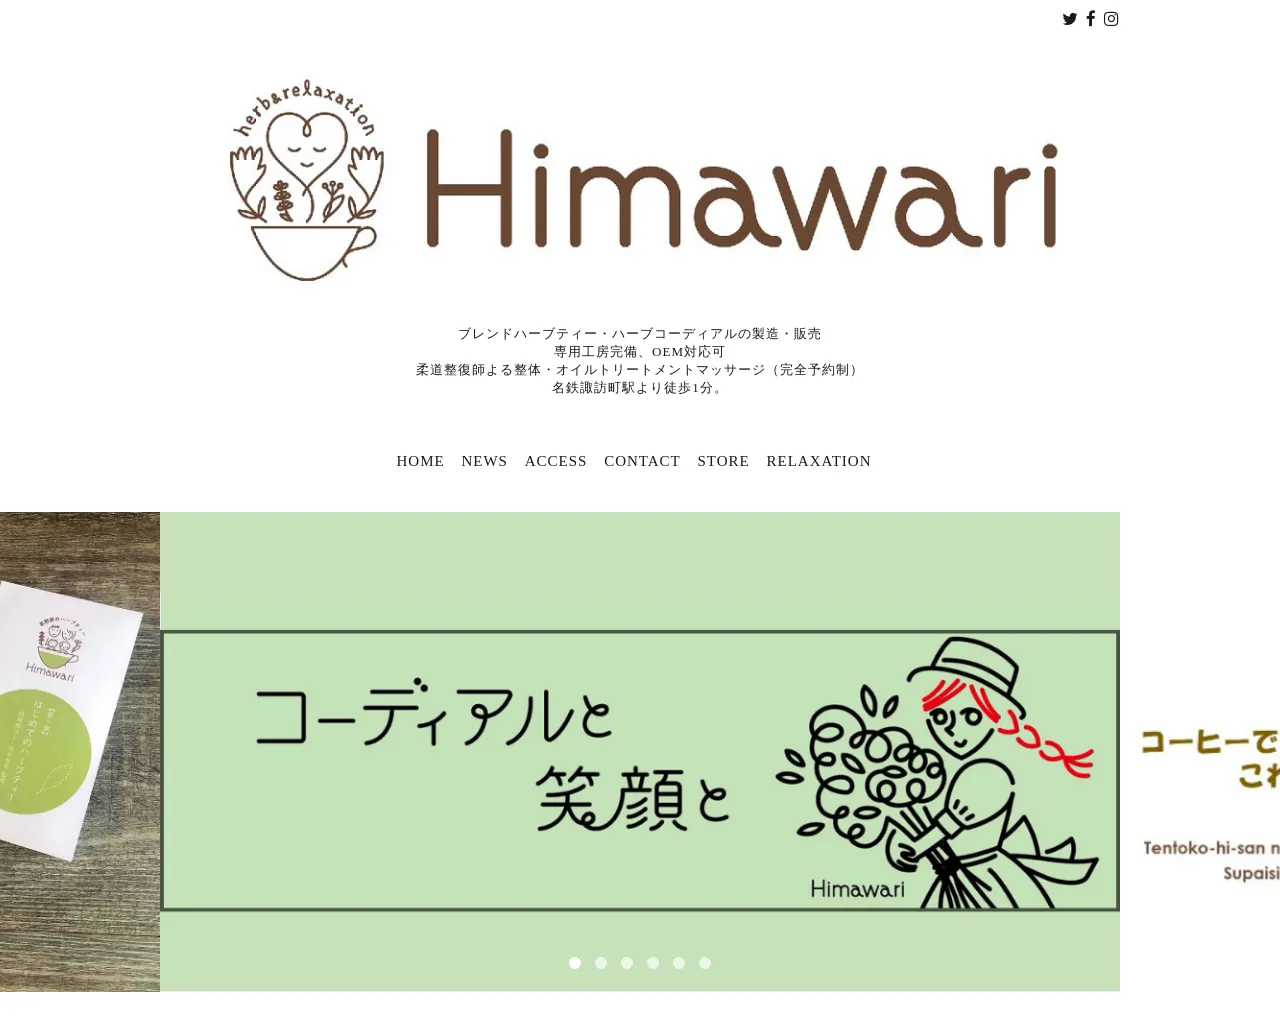 Herb & Relaxation Himawari site